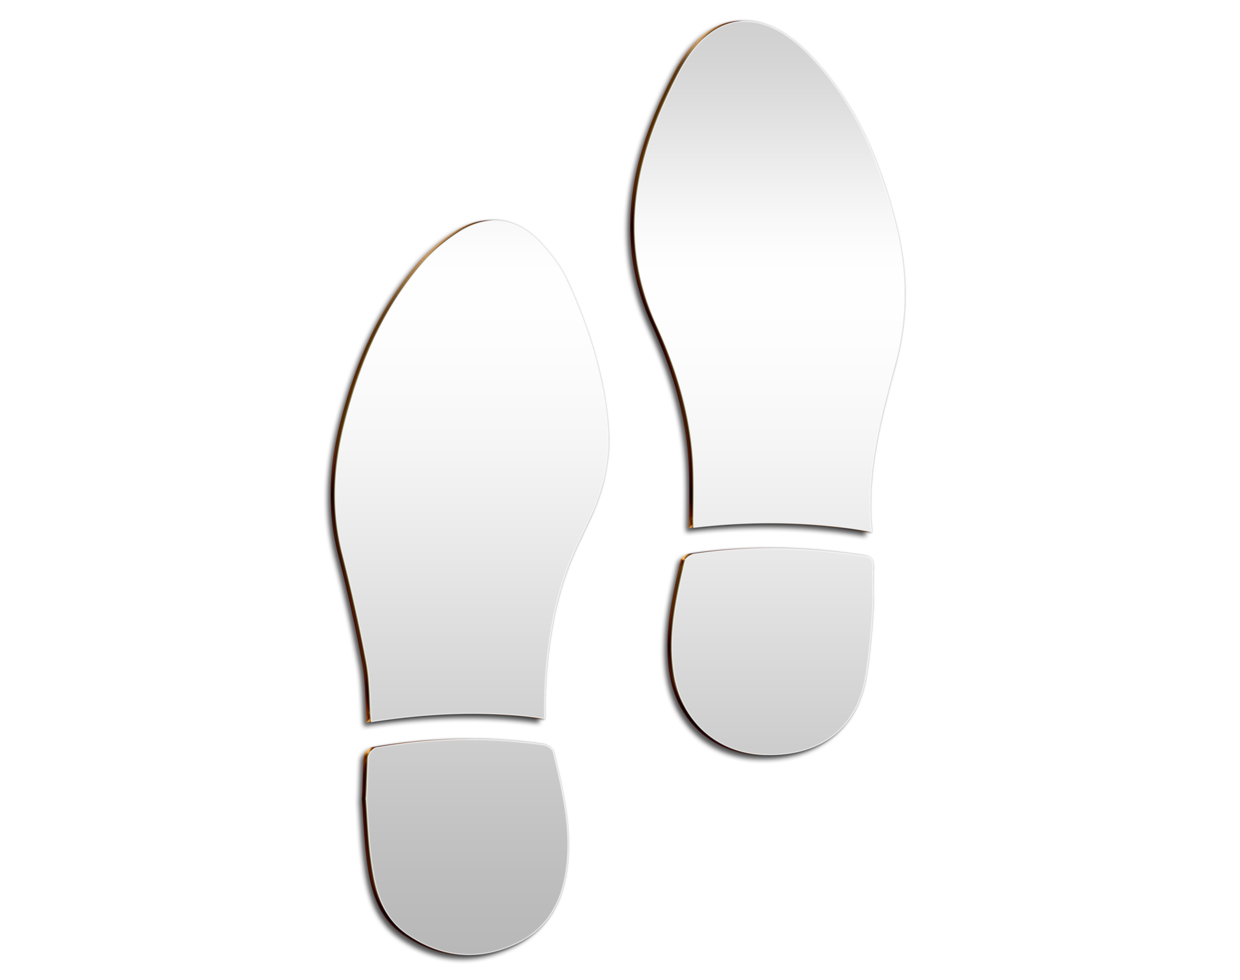 Human footprints on Transparent Background png